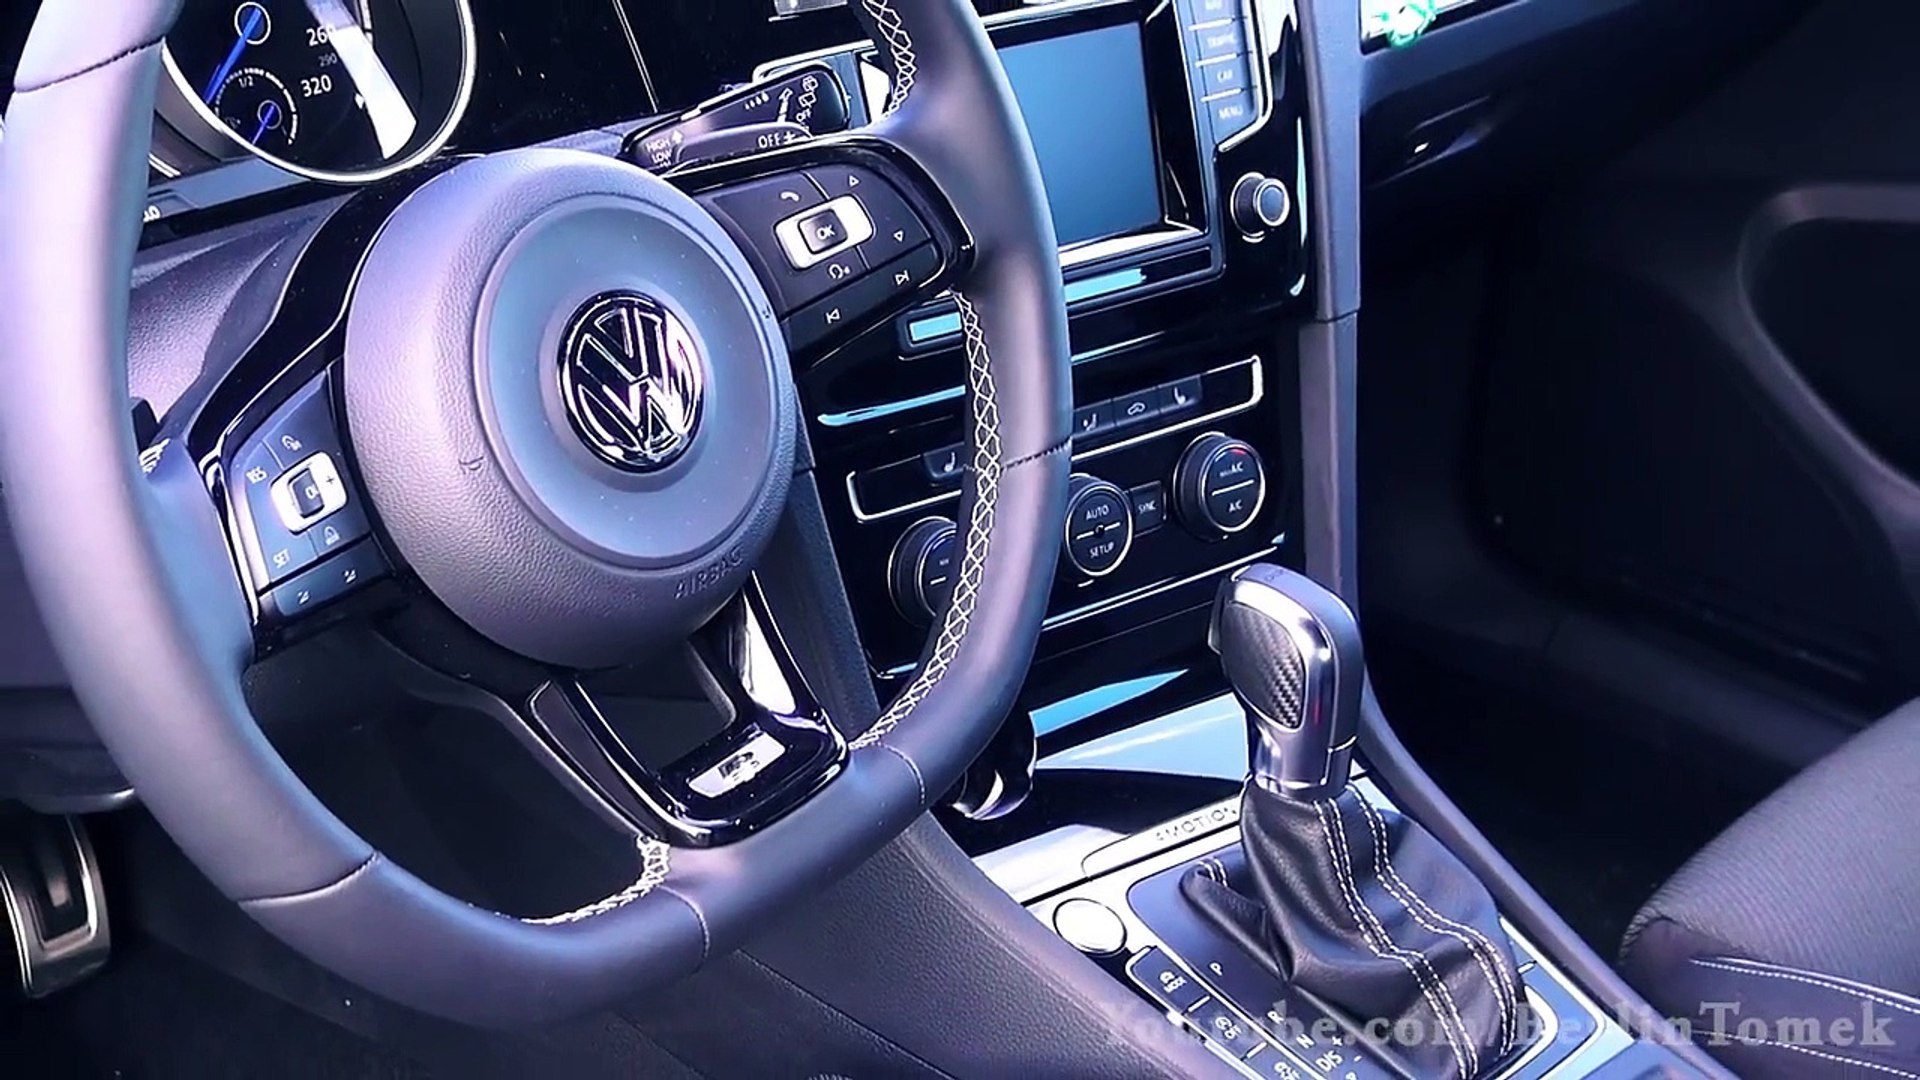 VW GOLF 7 R Acceleration Sound REVS Launch Control Revving DSG Shift  Volkswagen Beschleunigung - video Dailymotion